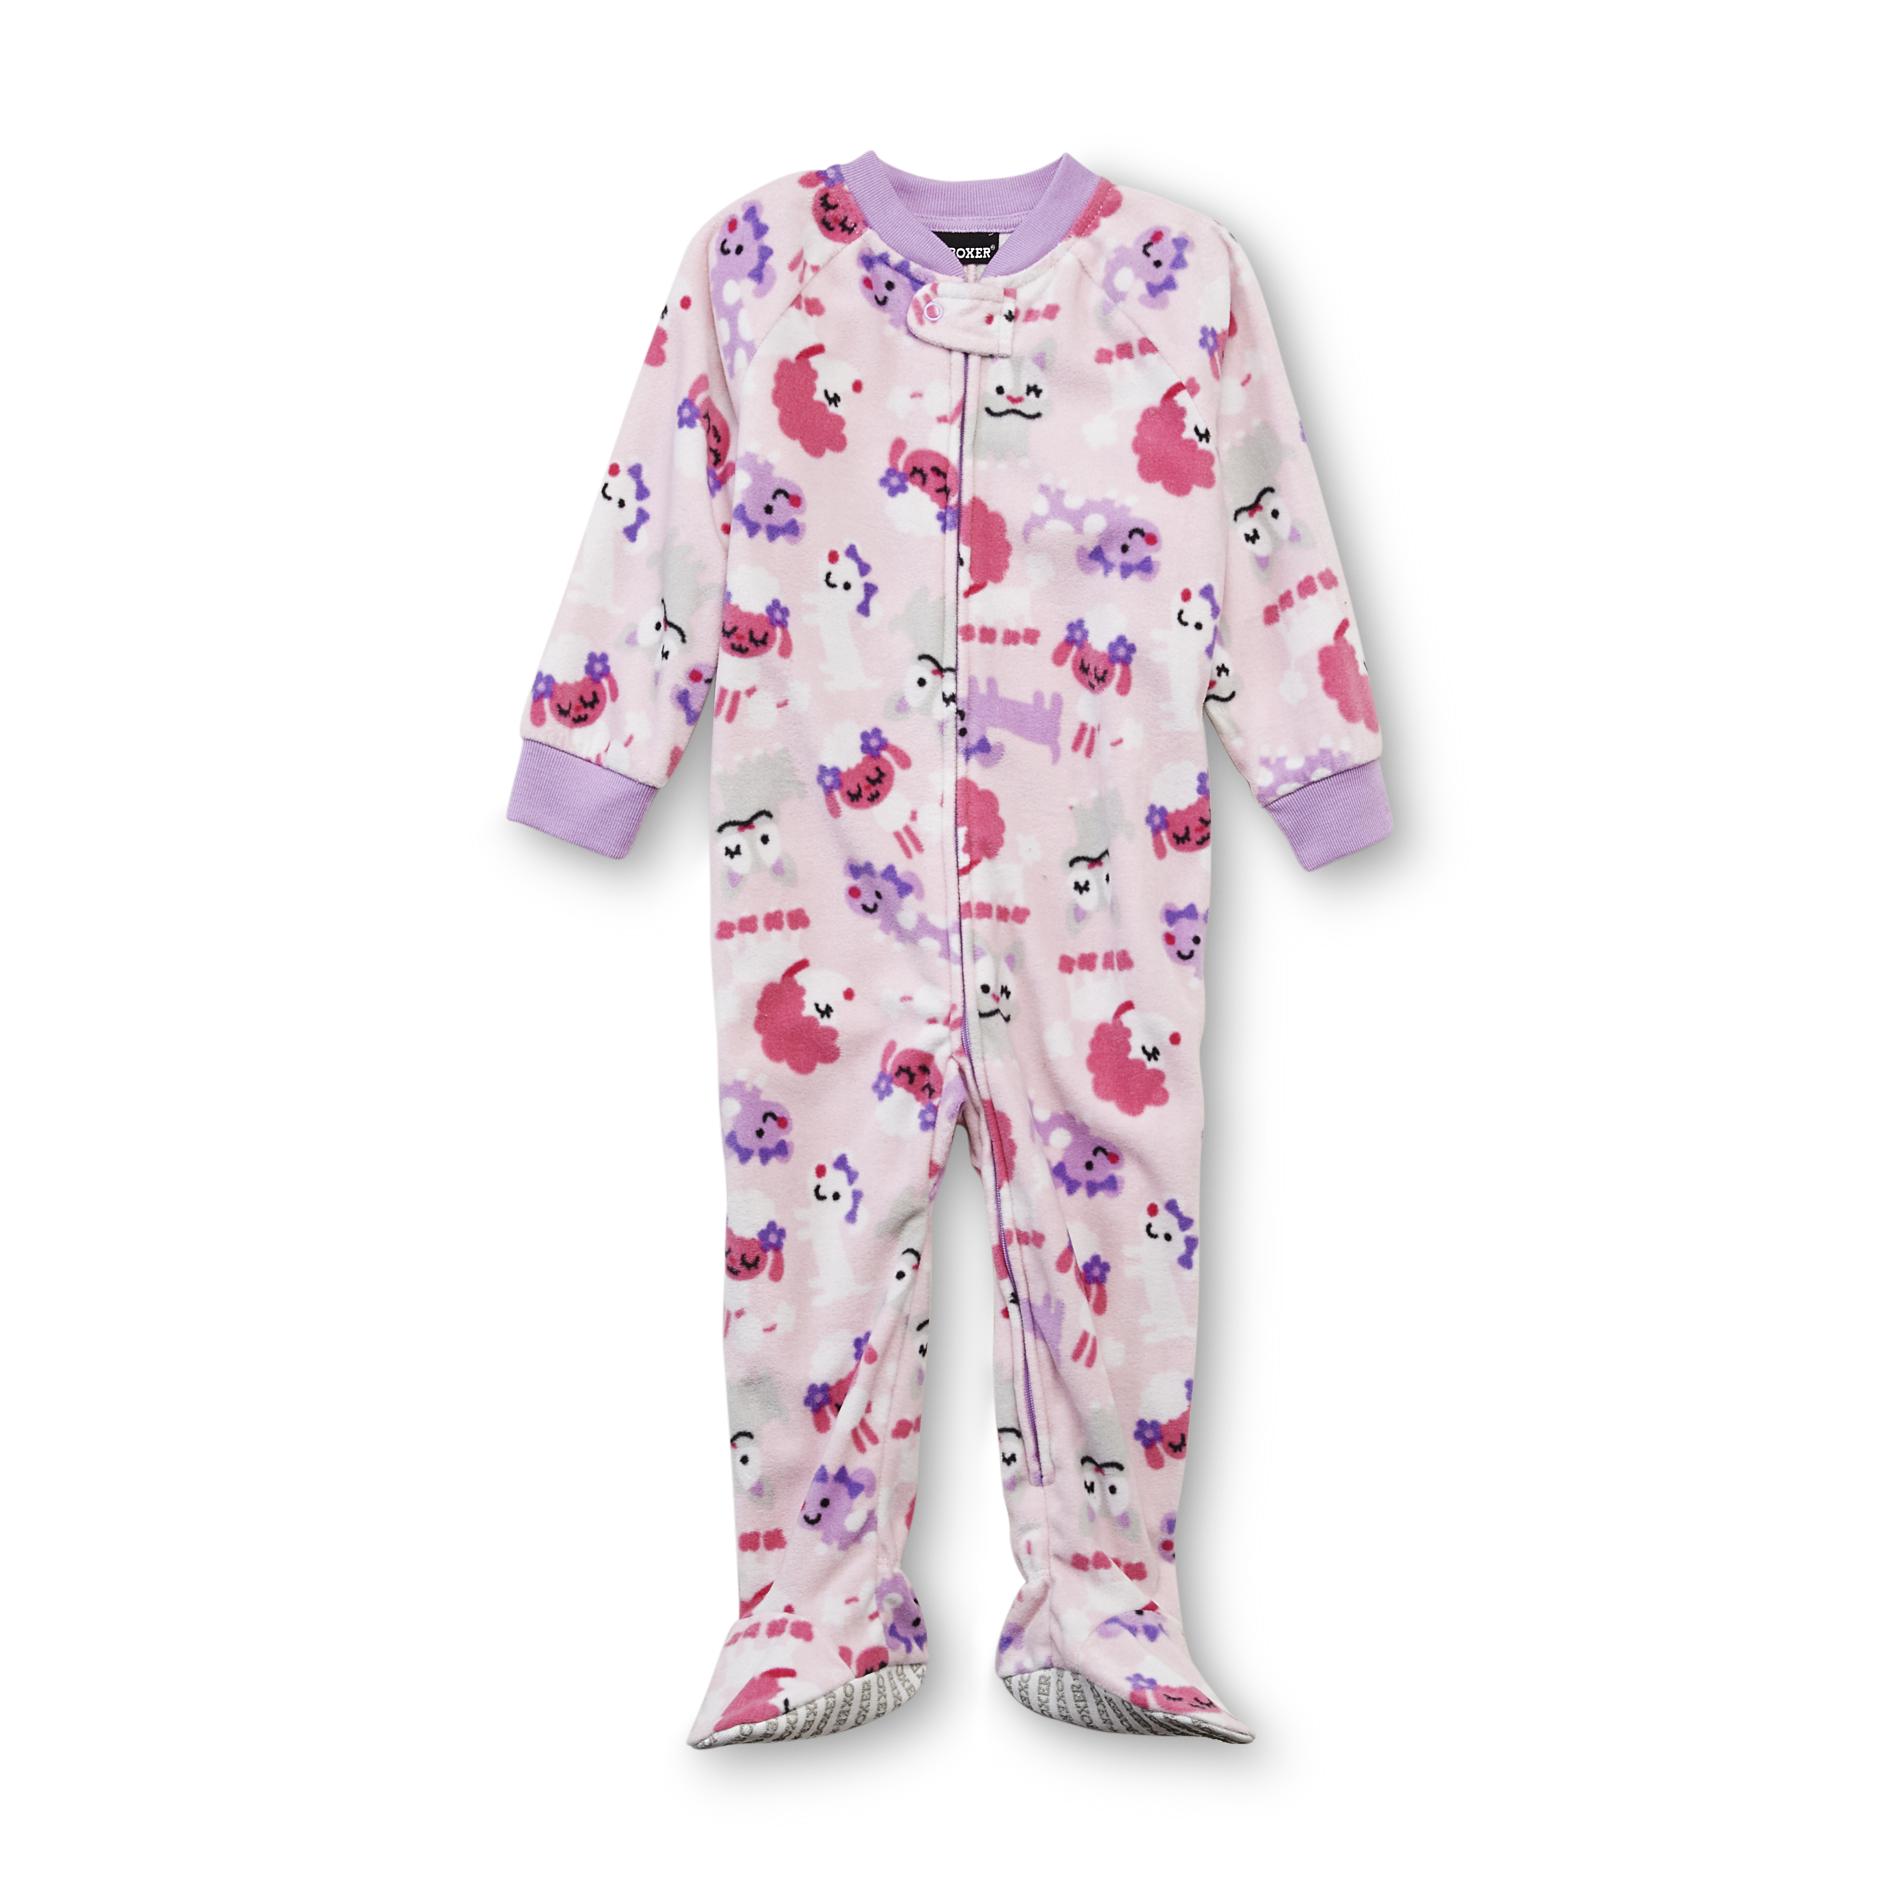 Joe Boxer Infant & Toddler Girl's Footed Sleeper Pajamas - Puppies